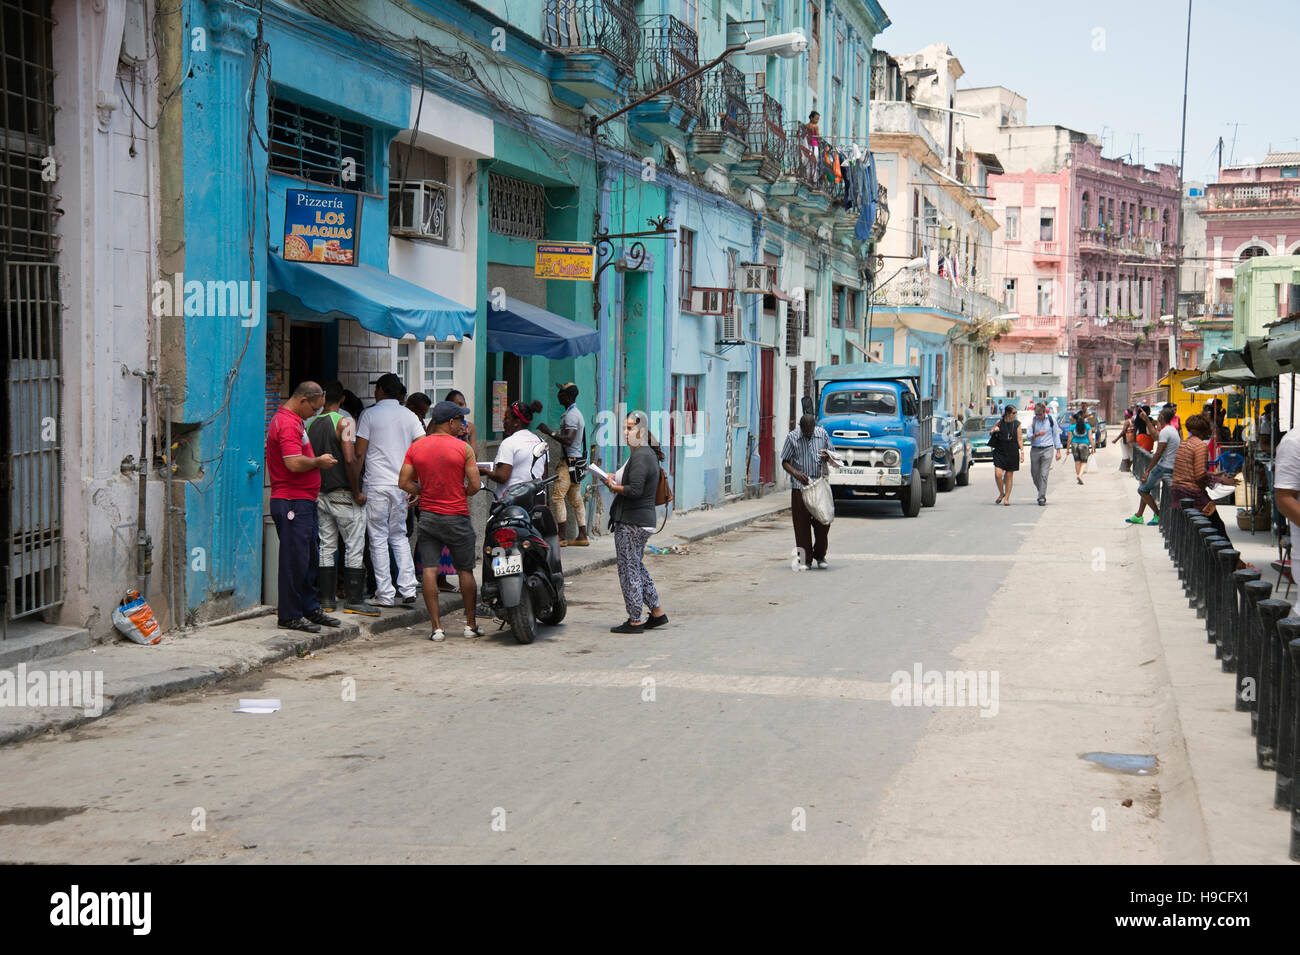 Cubans queue for pizza in a crumbling run down street in Centro Havana Cuba Stock Photo